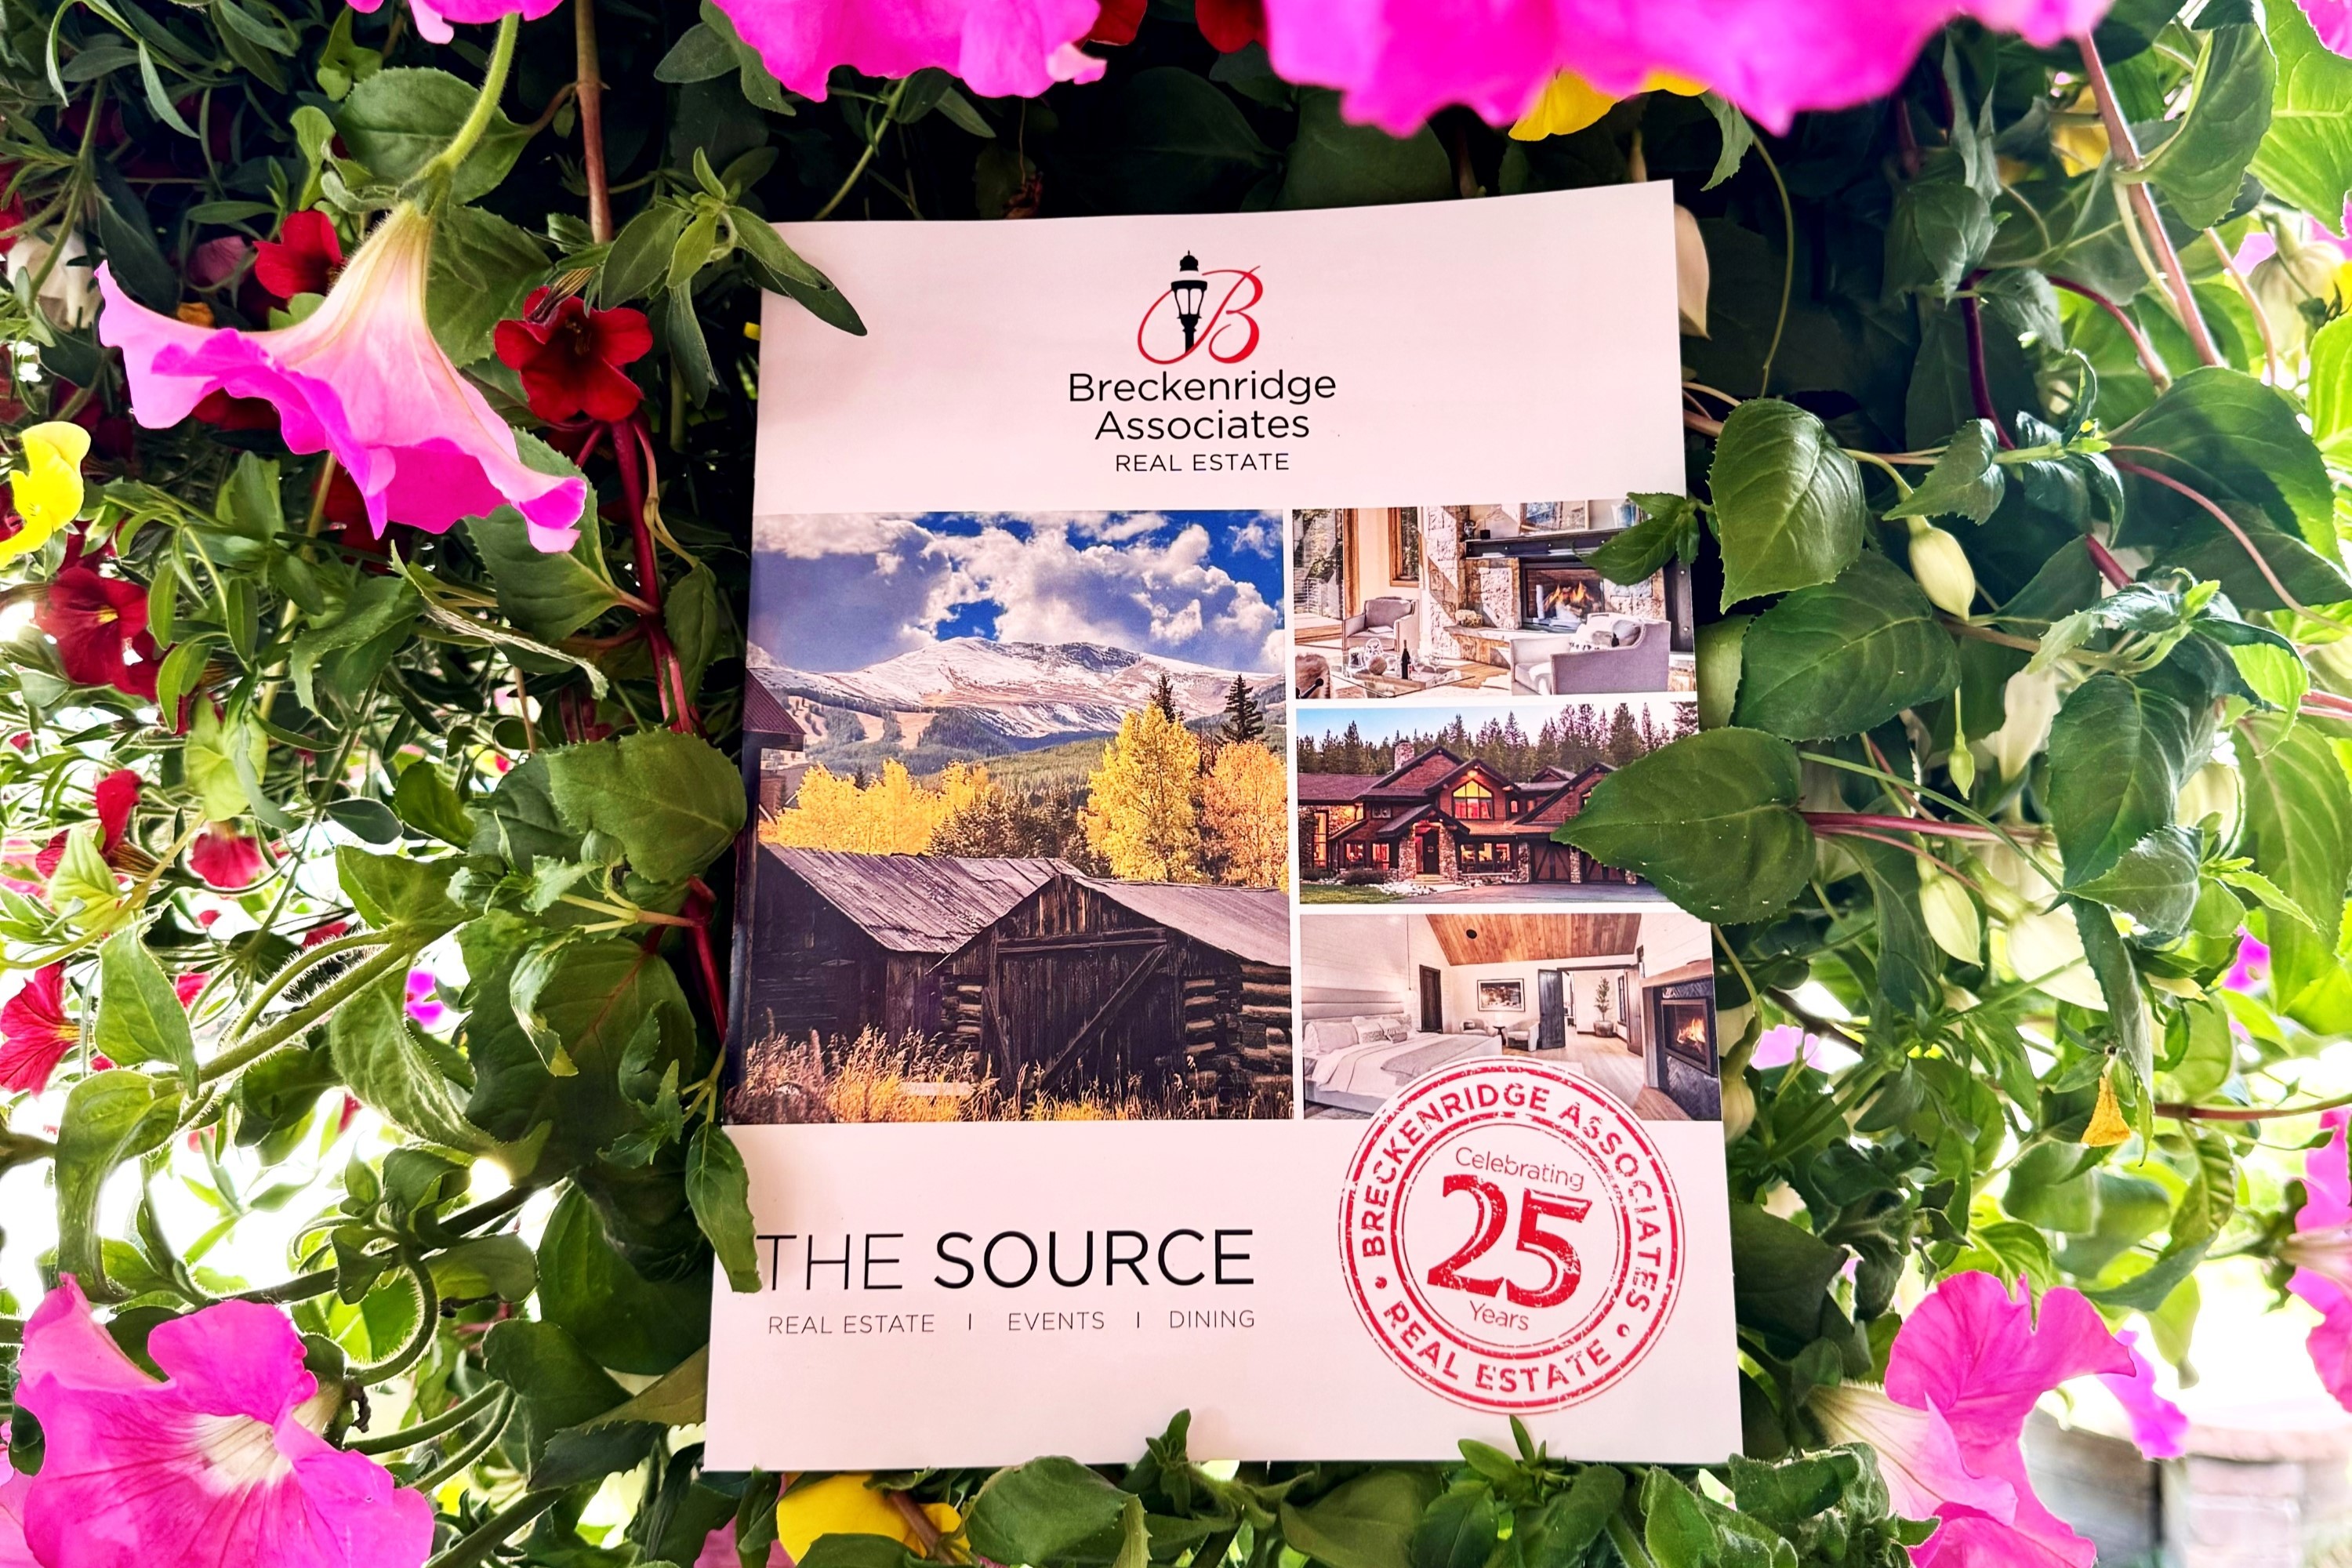 The Source Magazine by Breckenridge Associates Real Estate